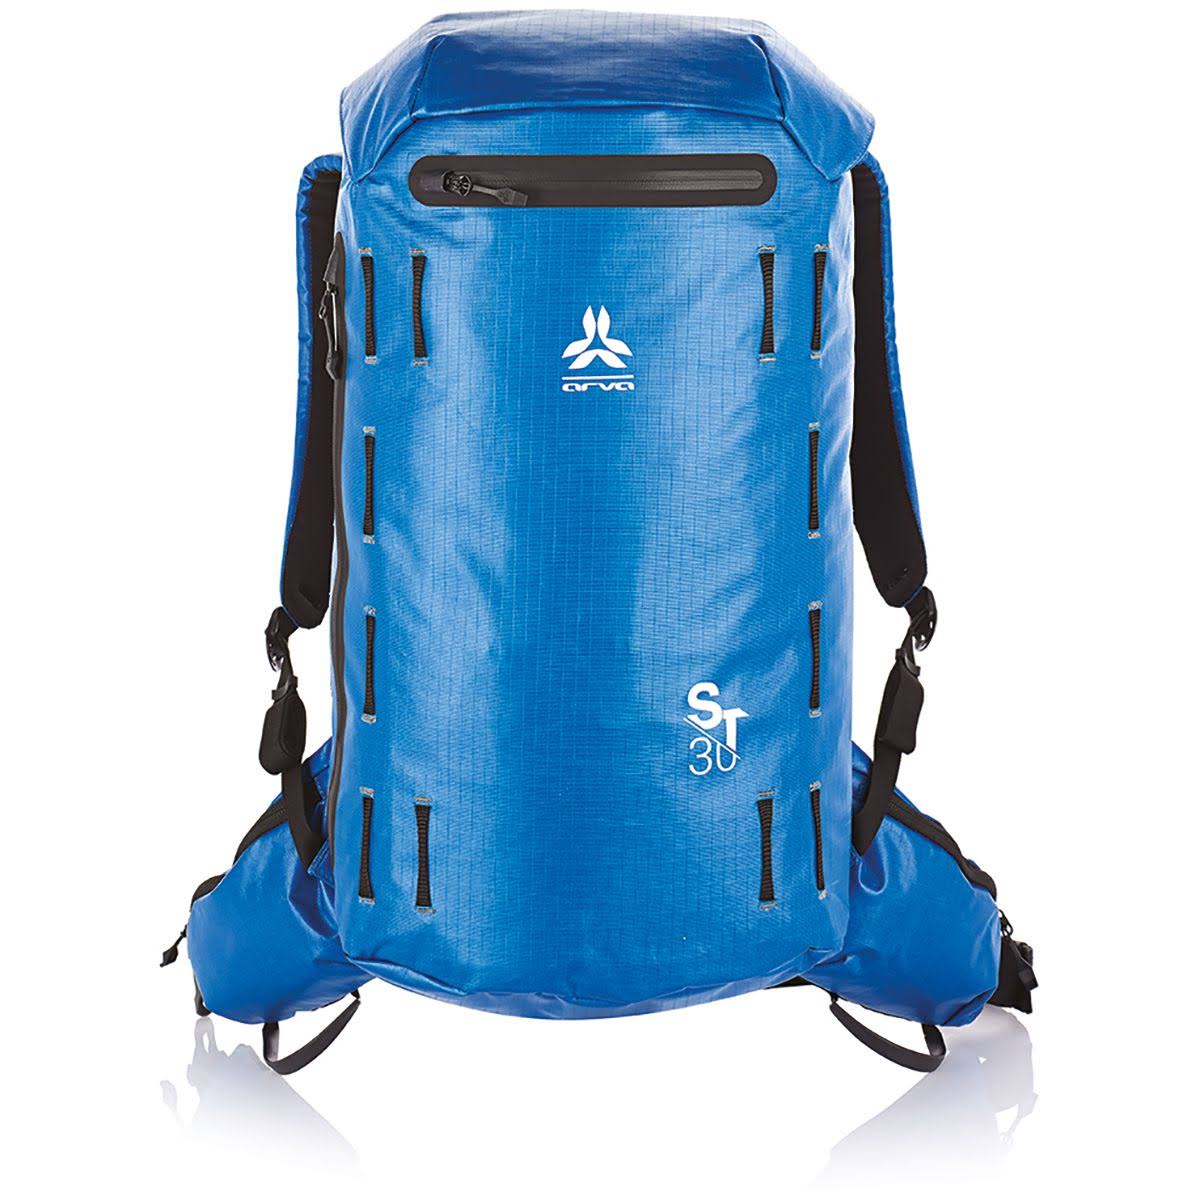 Backpack Arva St 30 (Blue)